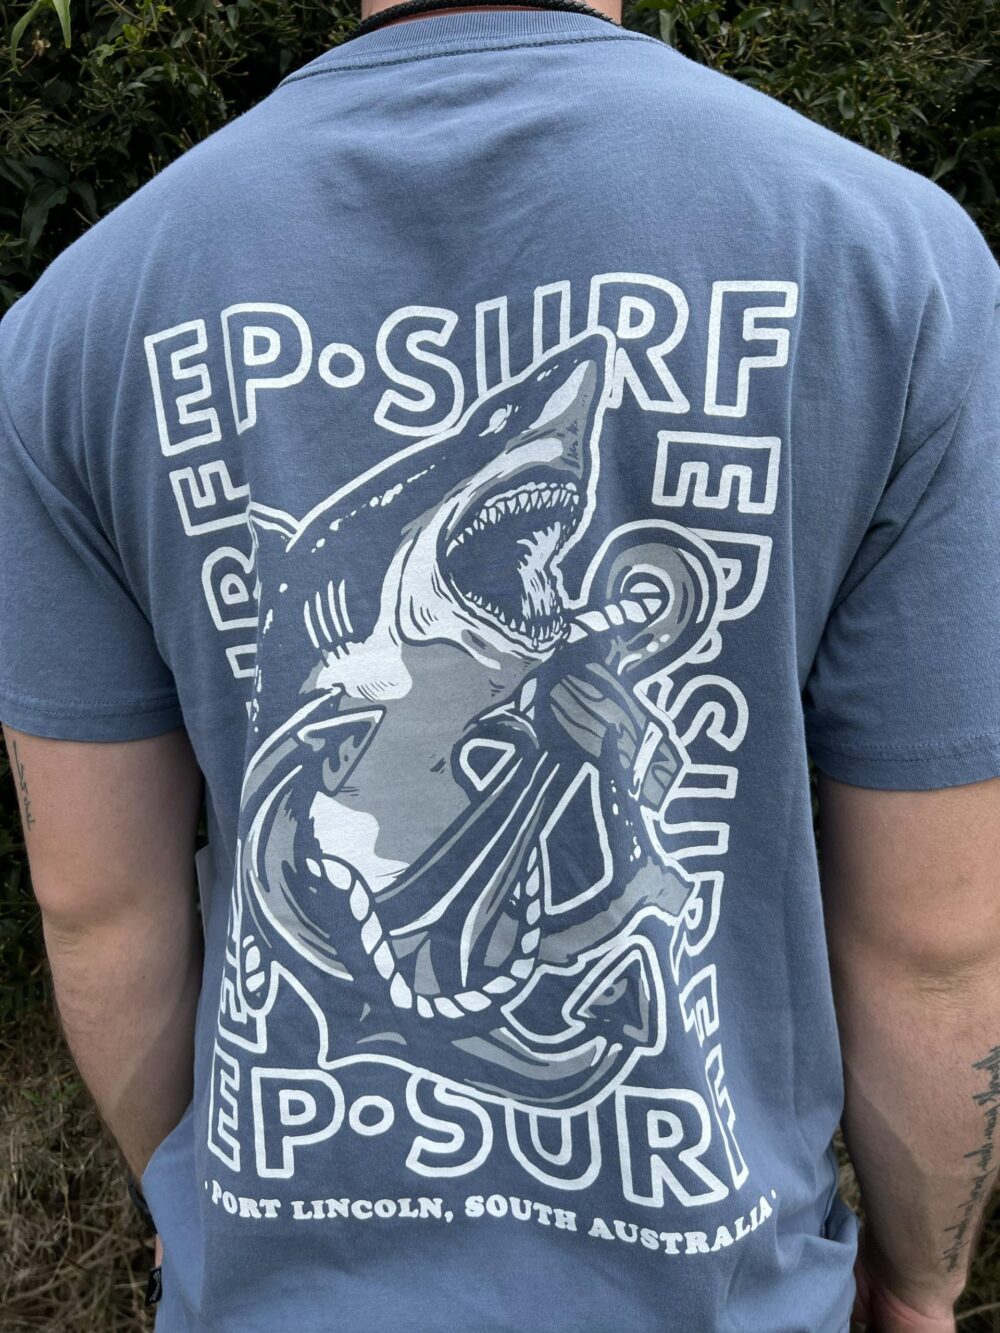 EPTMBSHARK North Sea/multi Ep Surf Ep Tee M Biffy Shark Mens Tops Clothing Clothing